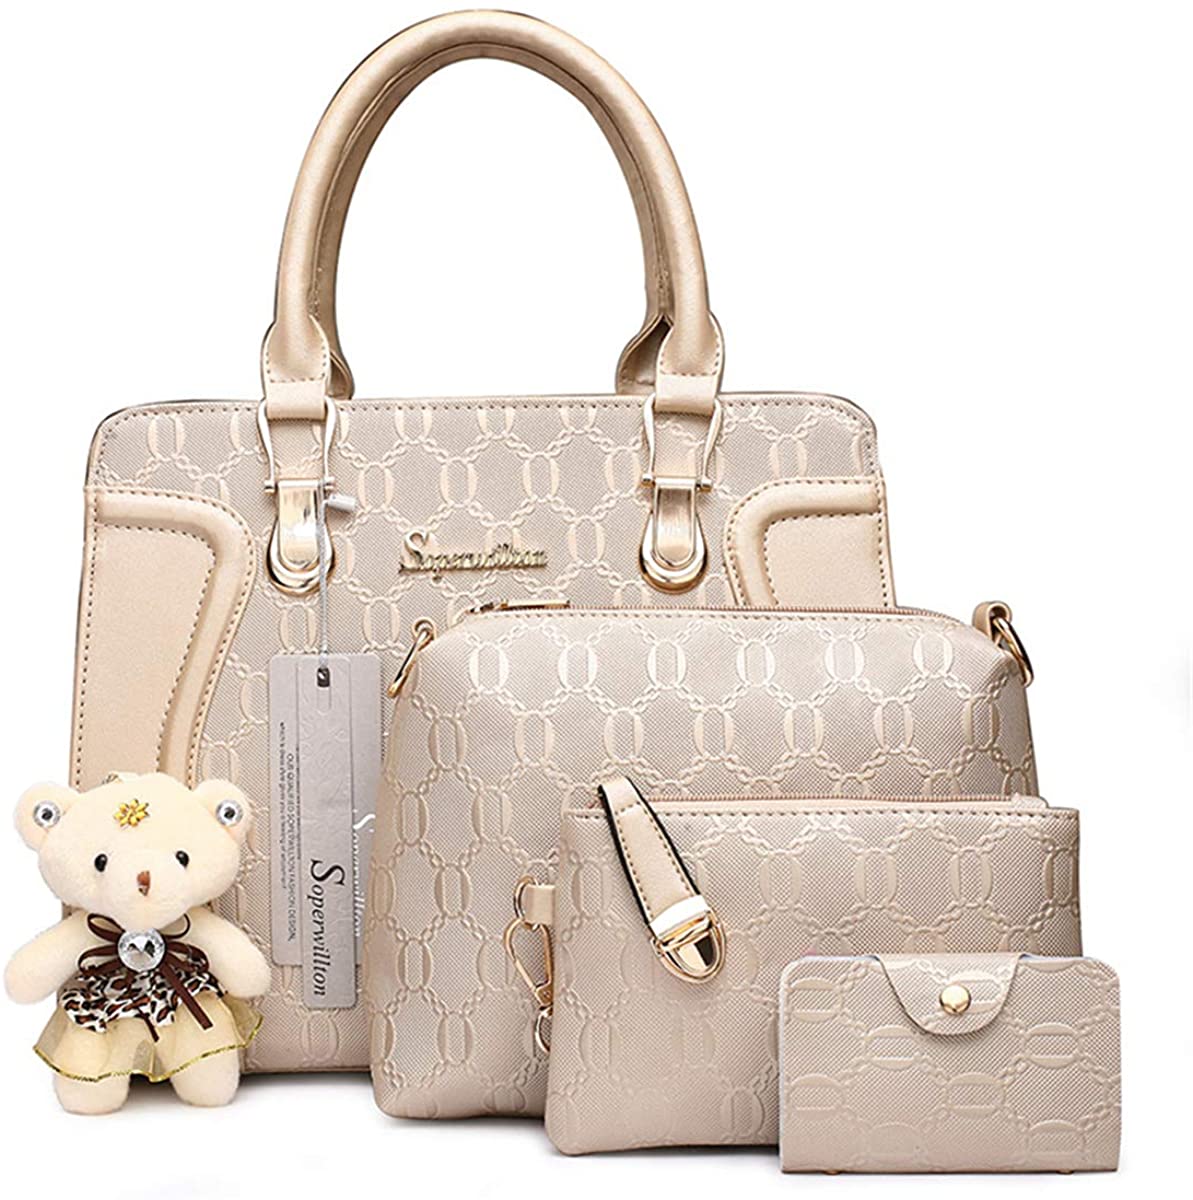 luxury graffiti printing leather handbags designer| Alibaba.com